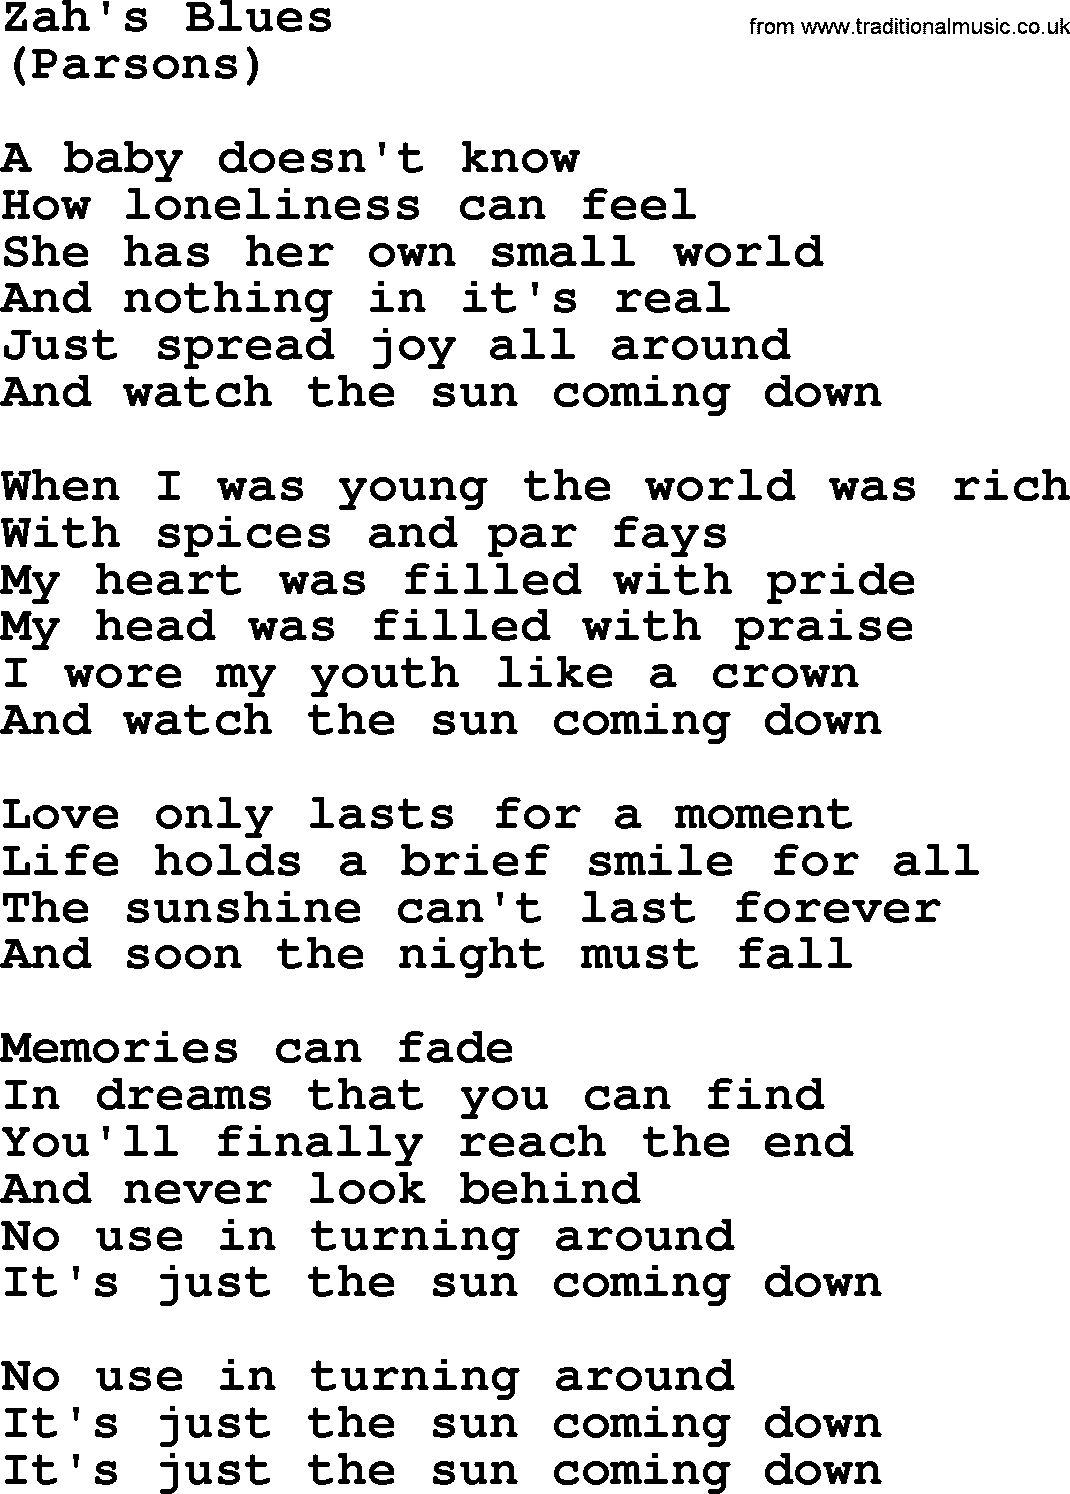 The Byrds song Zah's Blues, lyrics